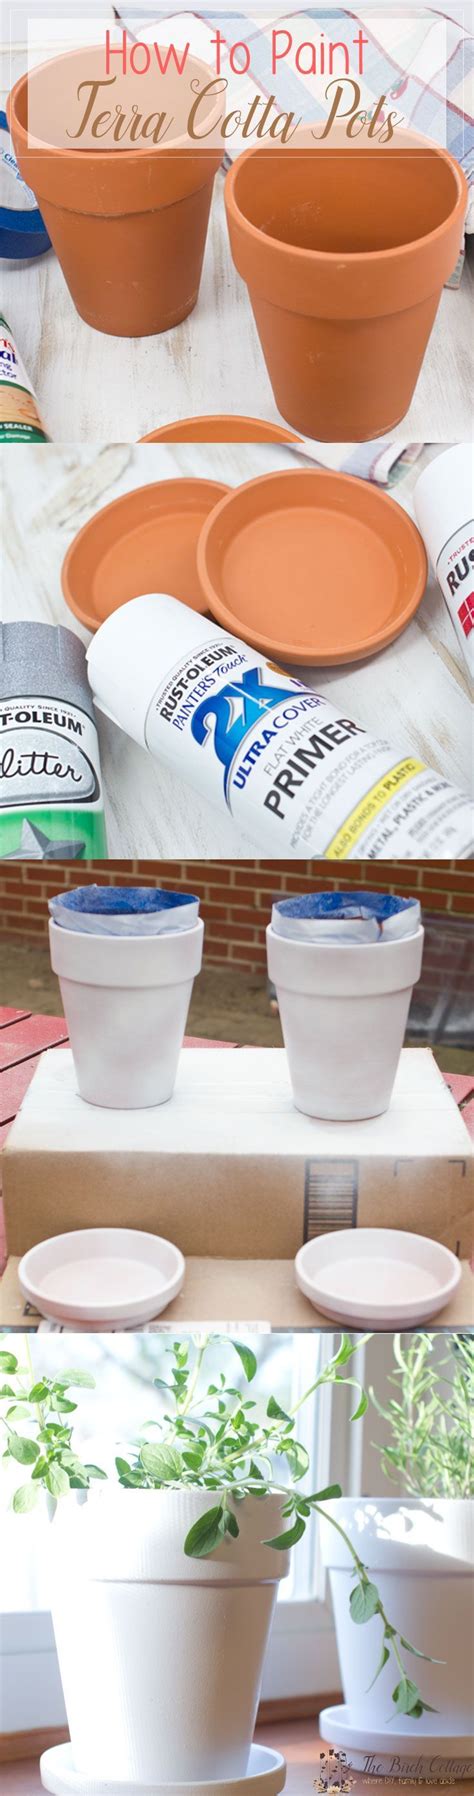 How To Paint Terra Cotta Pots With Spray Paint Terracotta Flower Pots